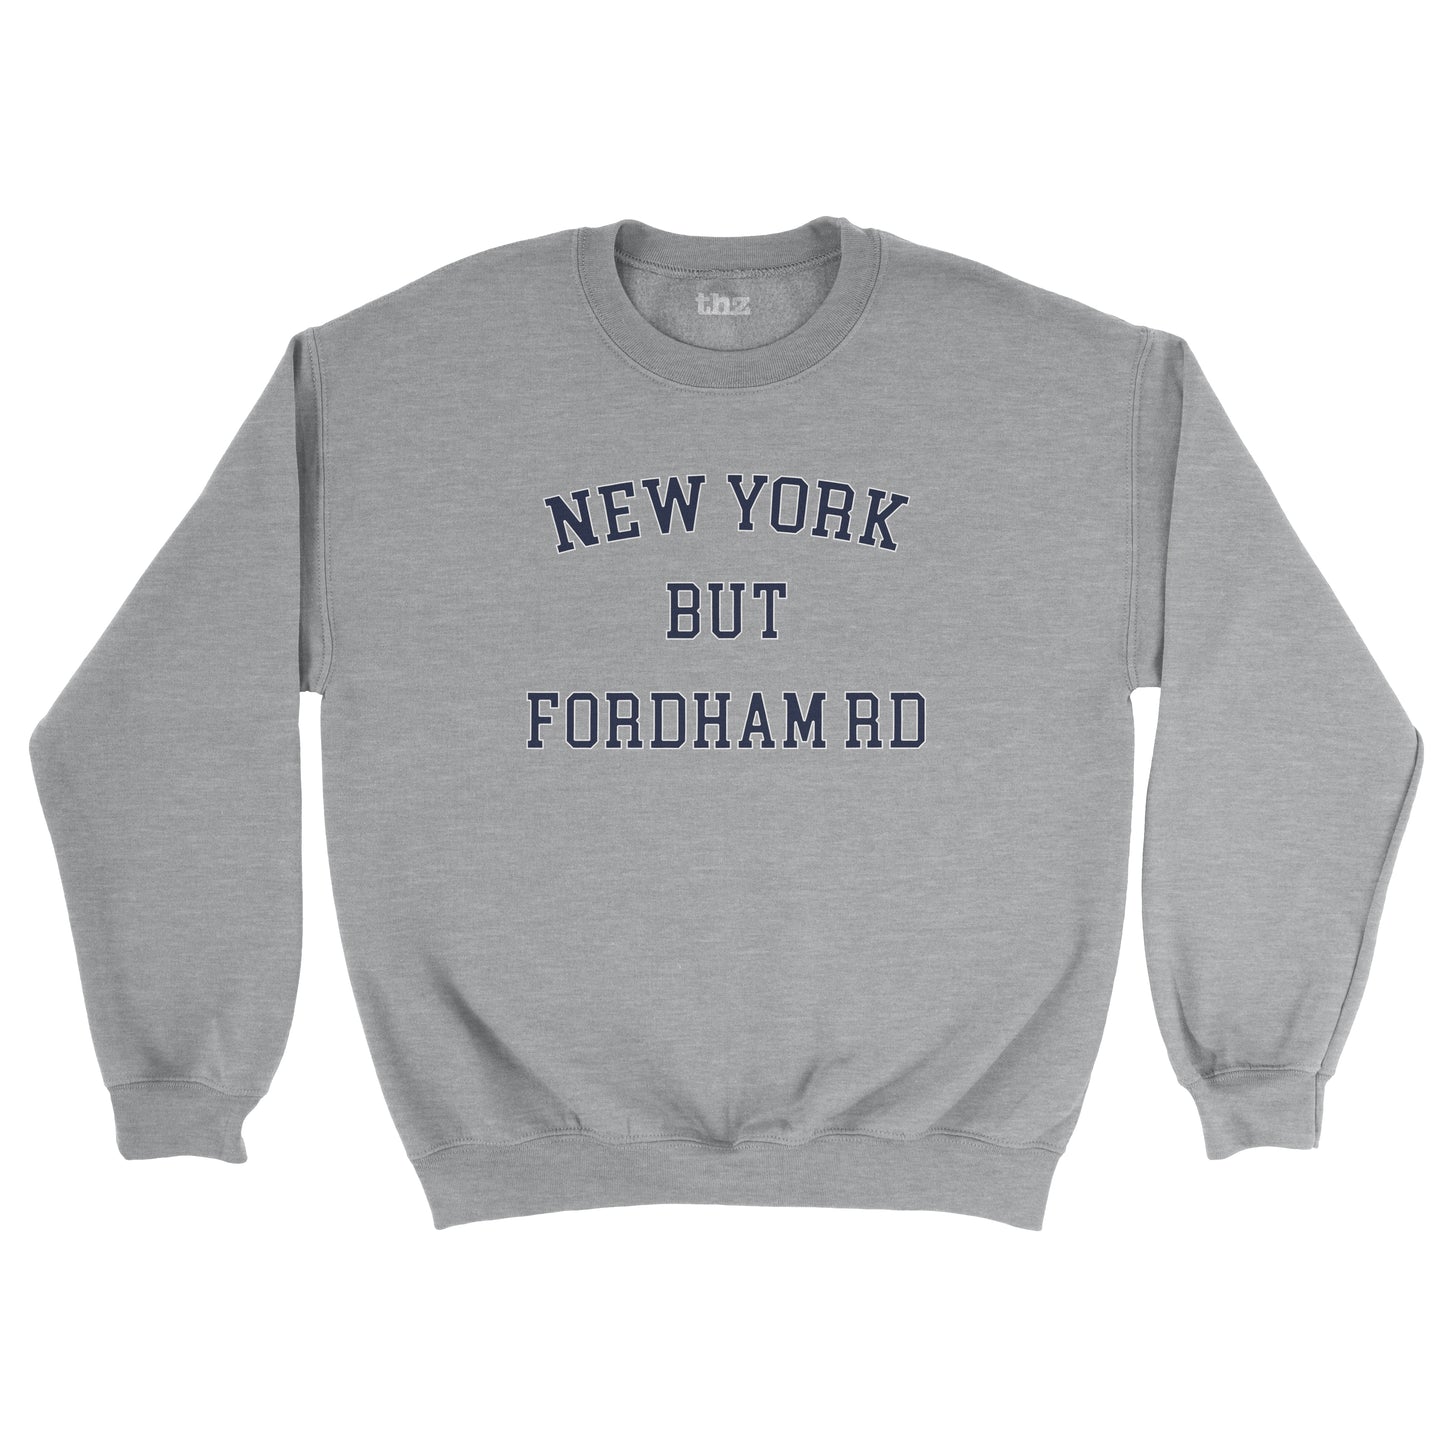 New York But Fordham Rd Unisex Sweatshirt